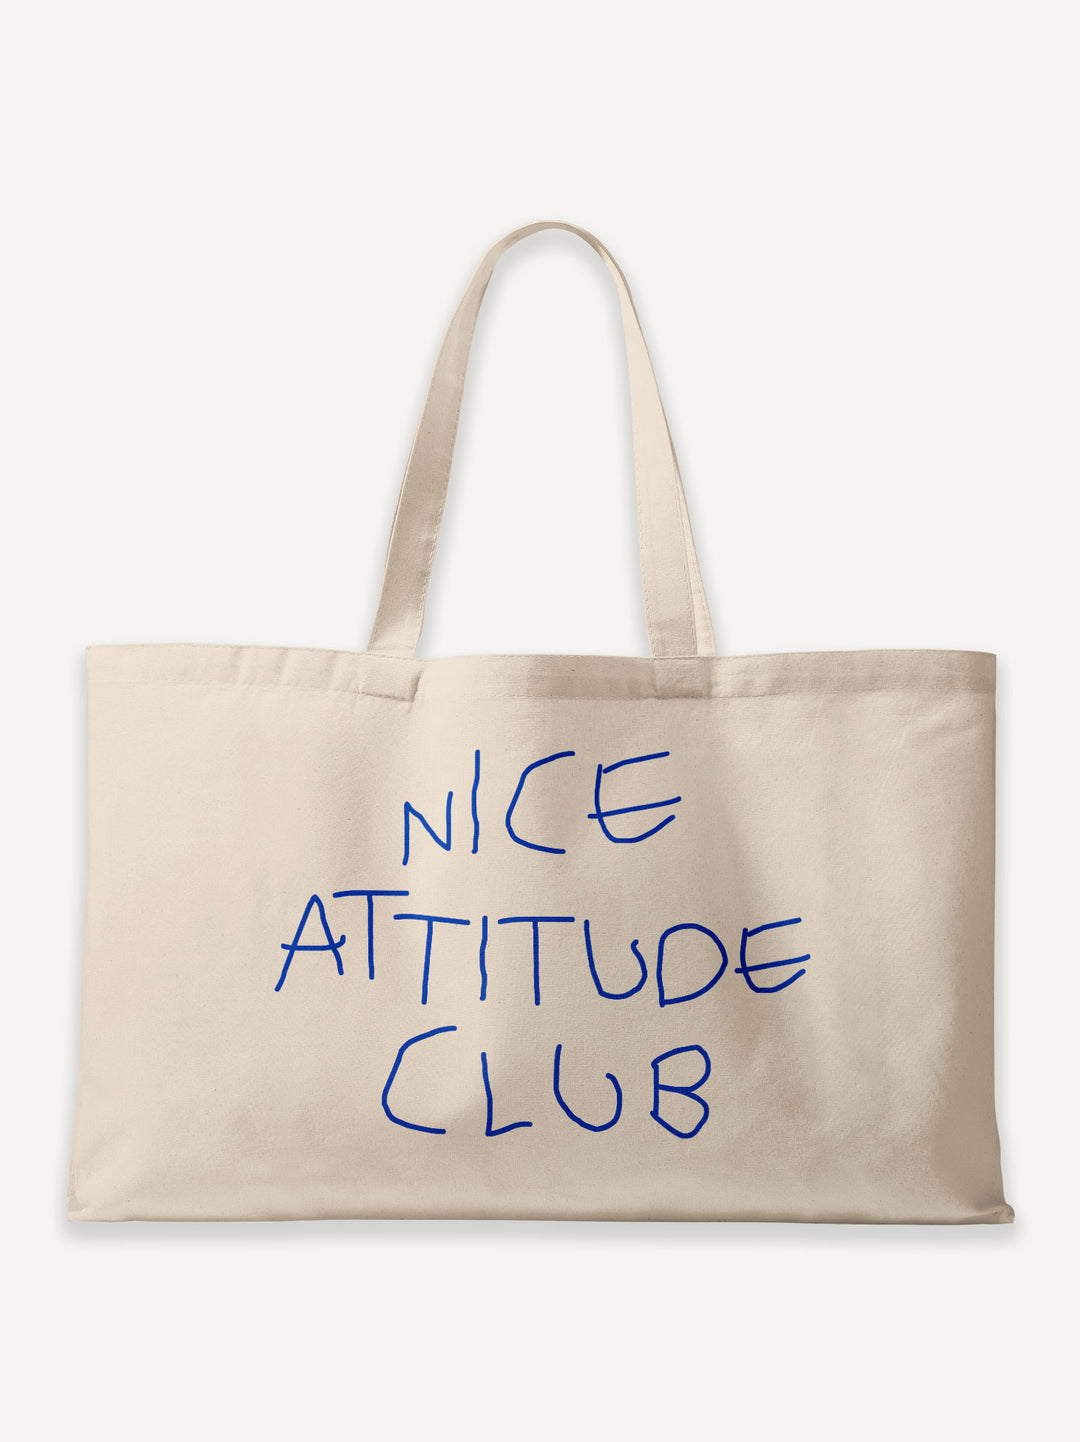 Nice Attitude Club Oversized Canvas Bag